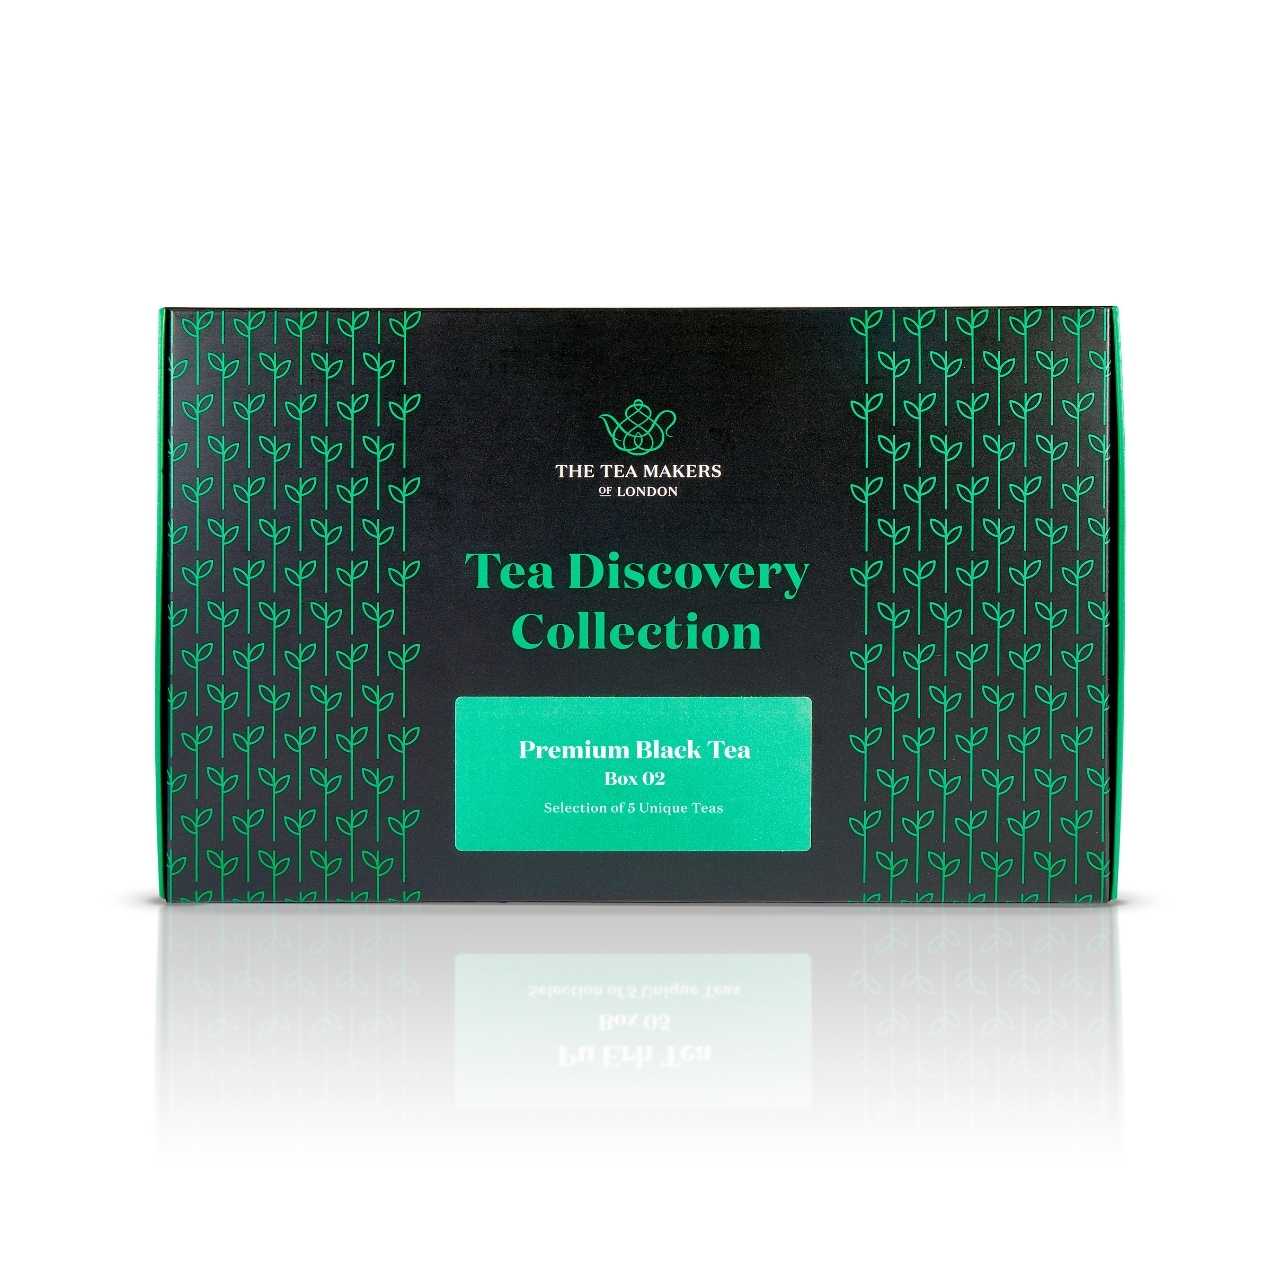 Premium Black Tea Discovery Collection